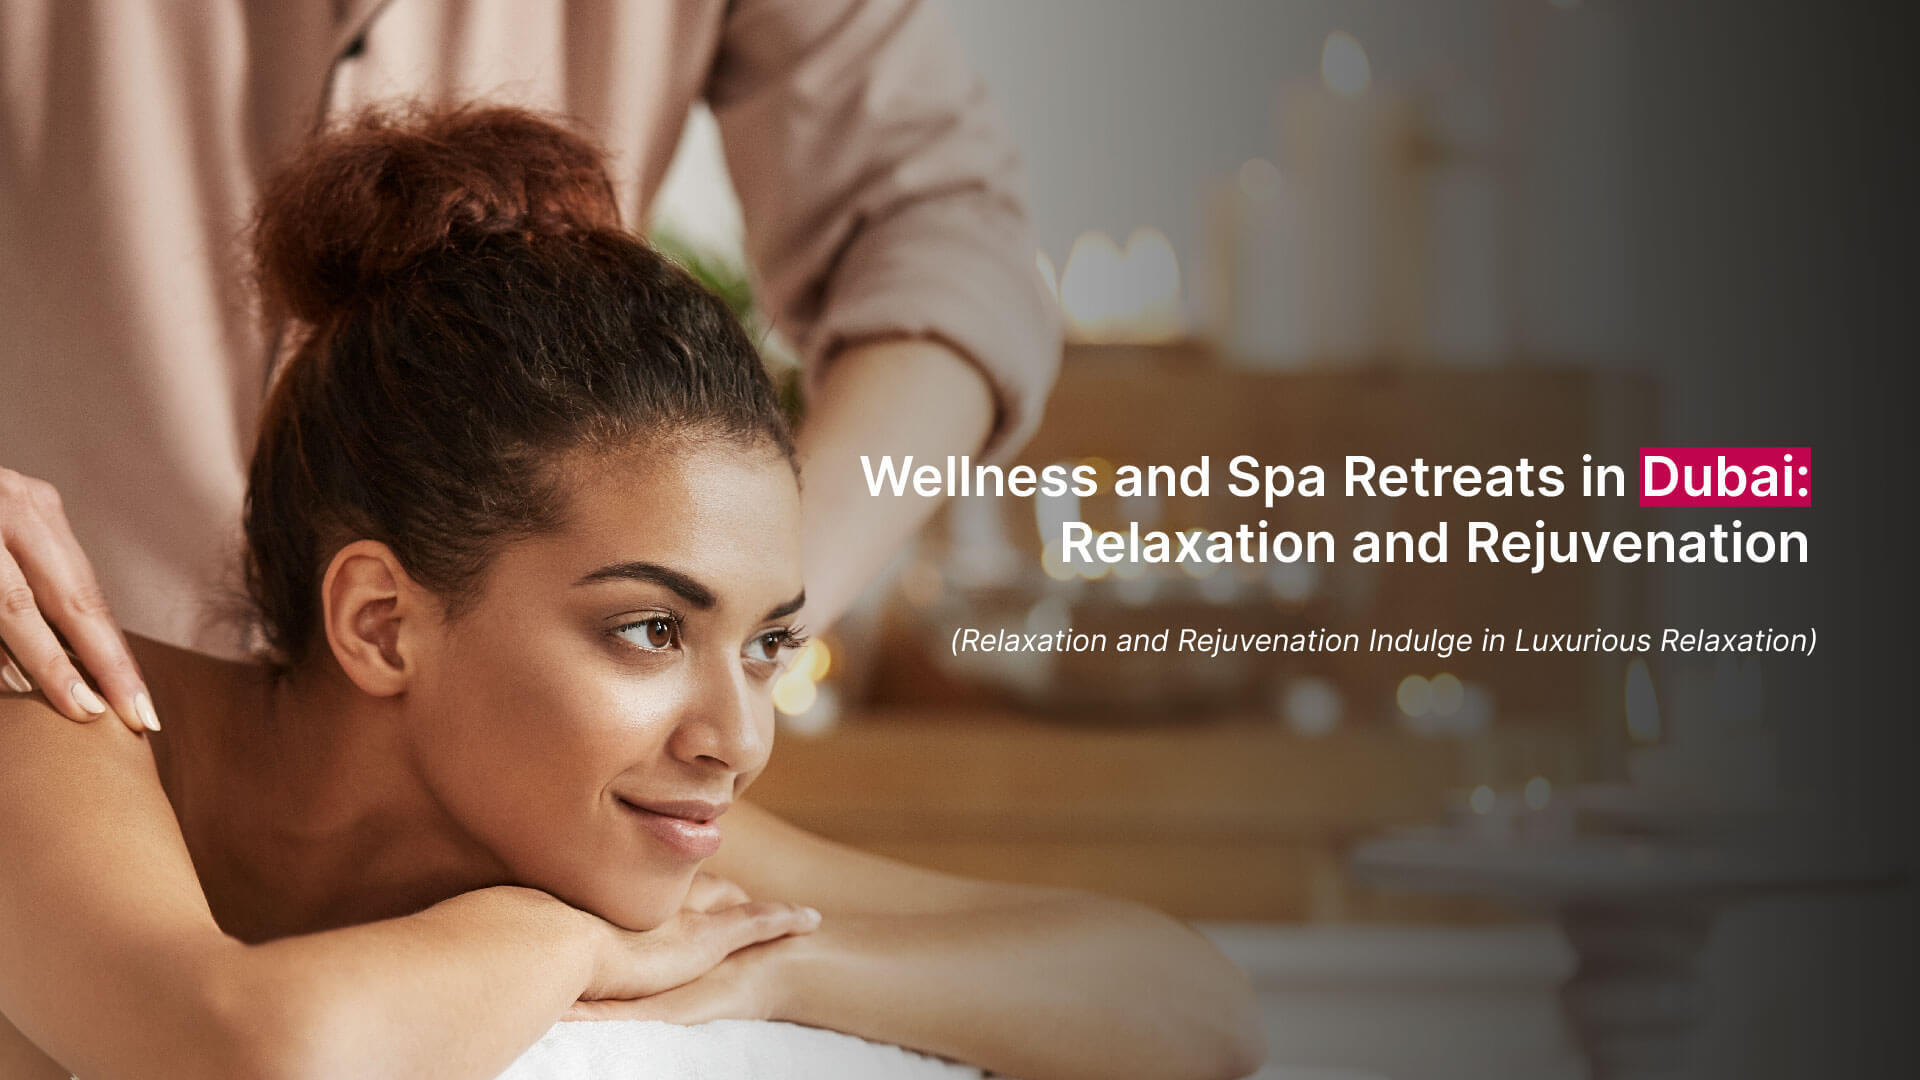 II. Benefits of Spa Retreats and Retreats